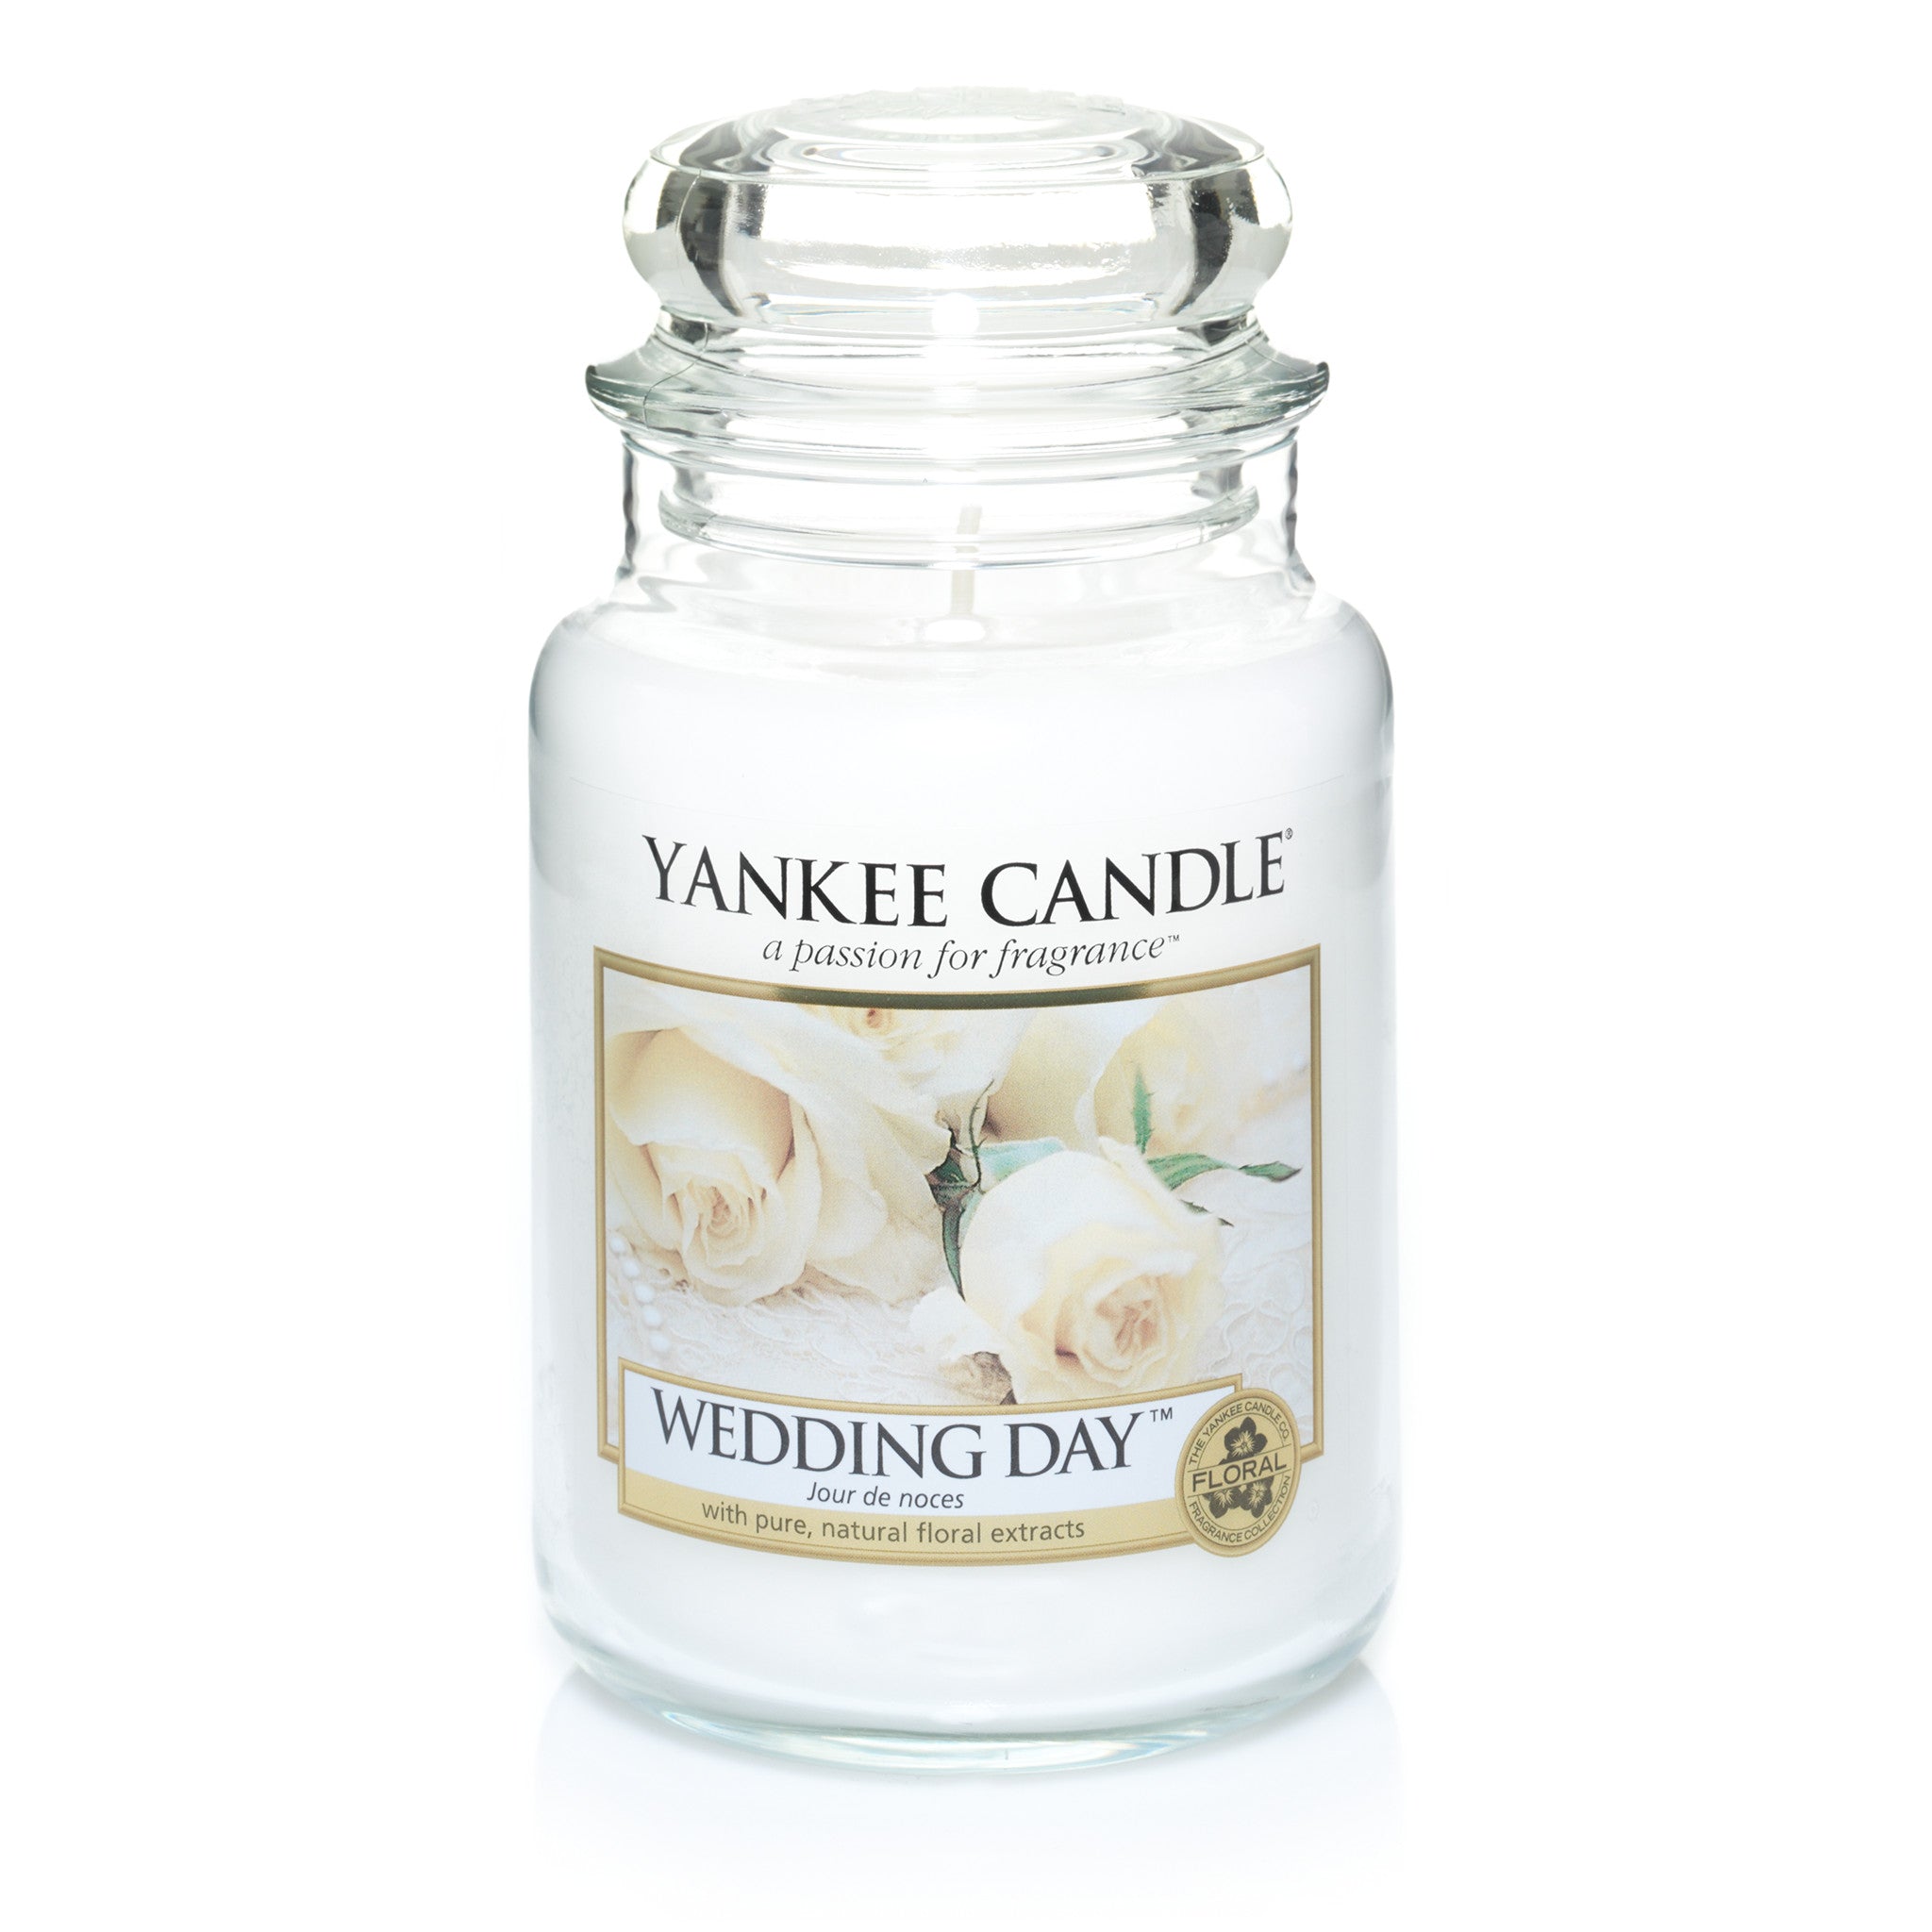 WEDDING DAY -Yankee Candle- Giara Grande